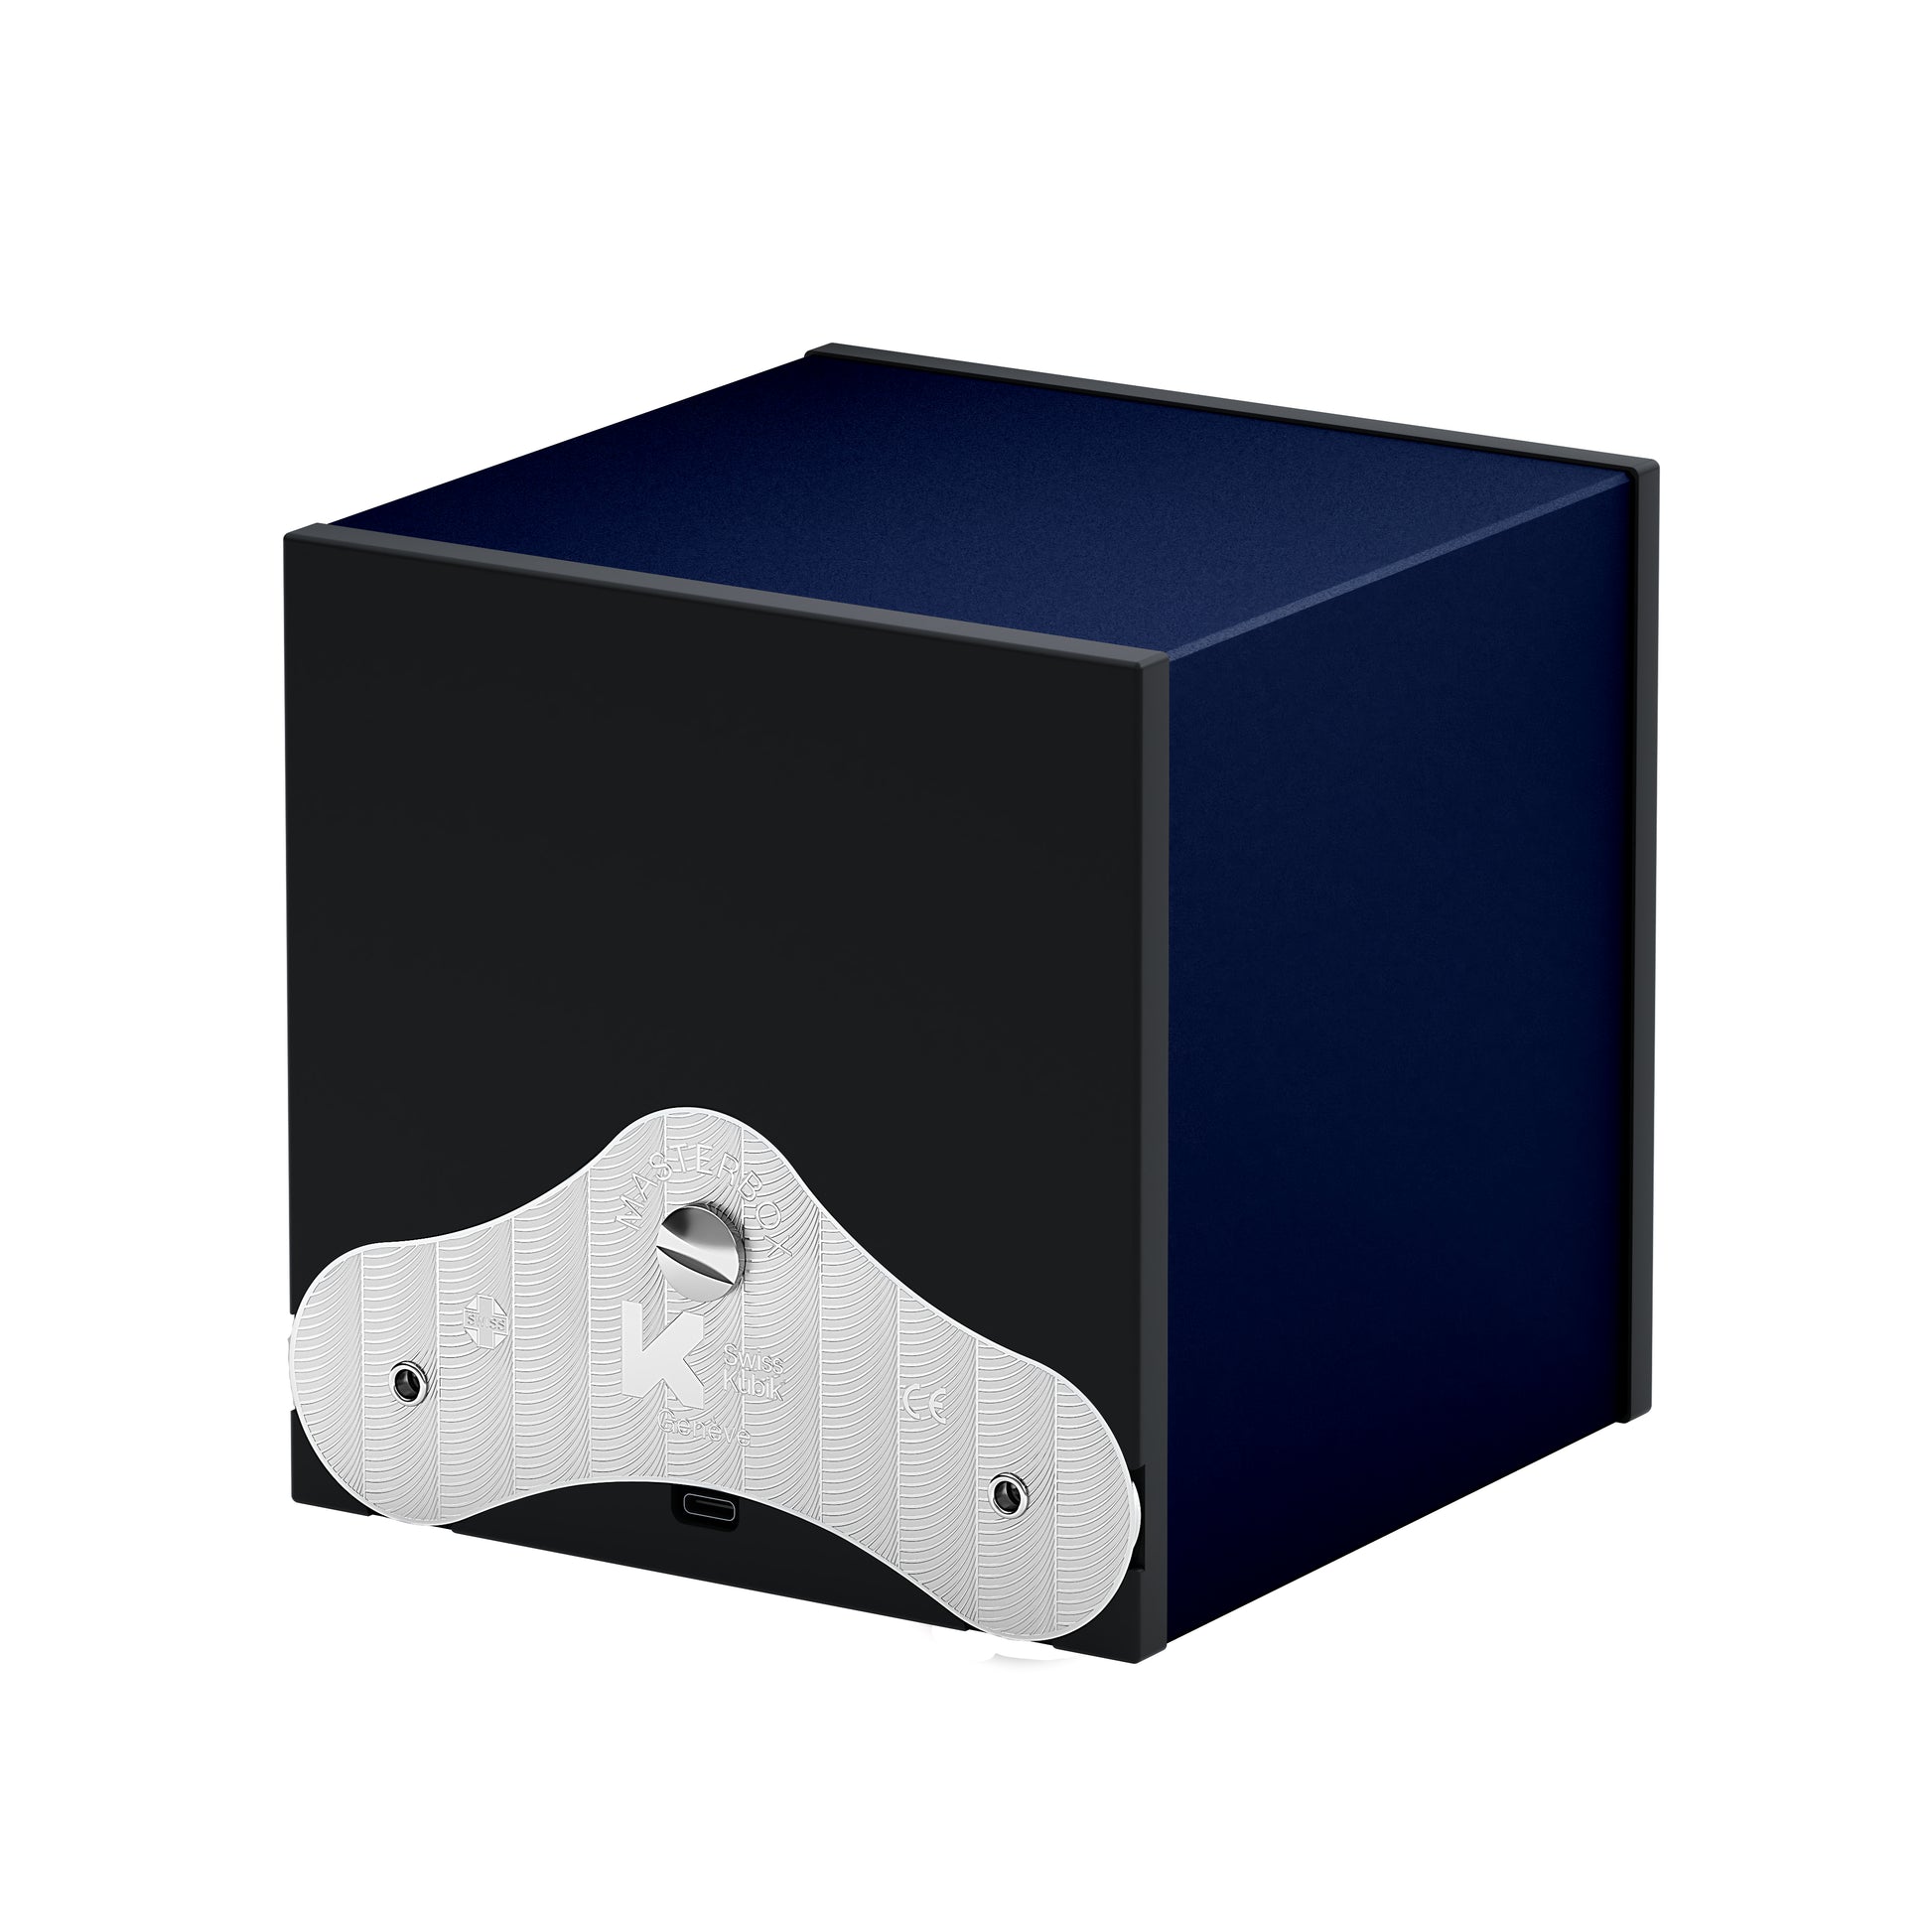 SwissKubik : remontoir montre automatique Masterbox Aluminium Bleu Marine 1 montre